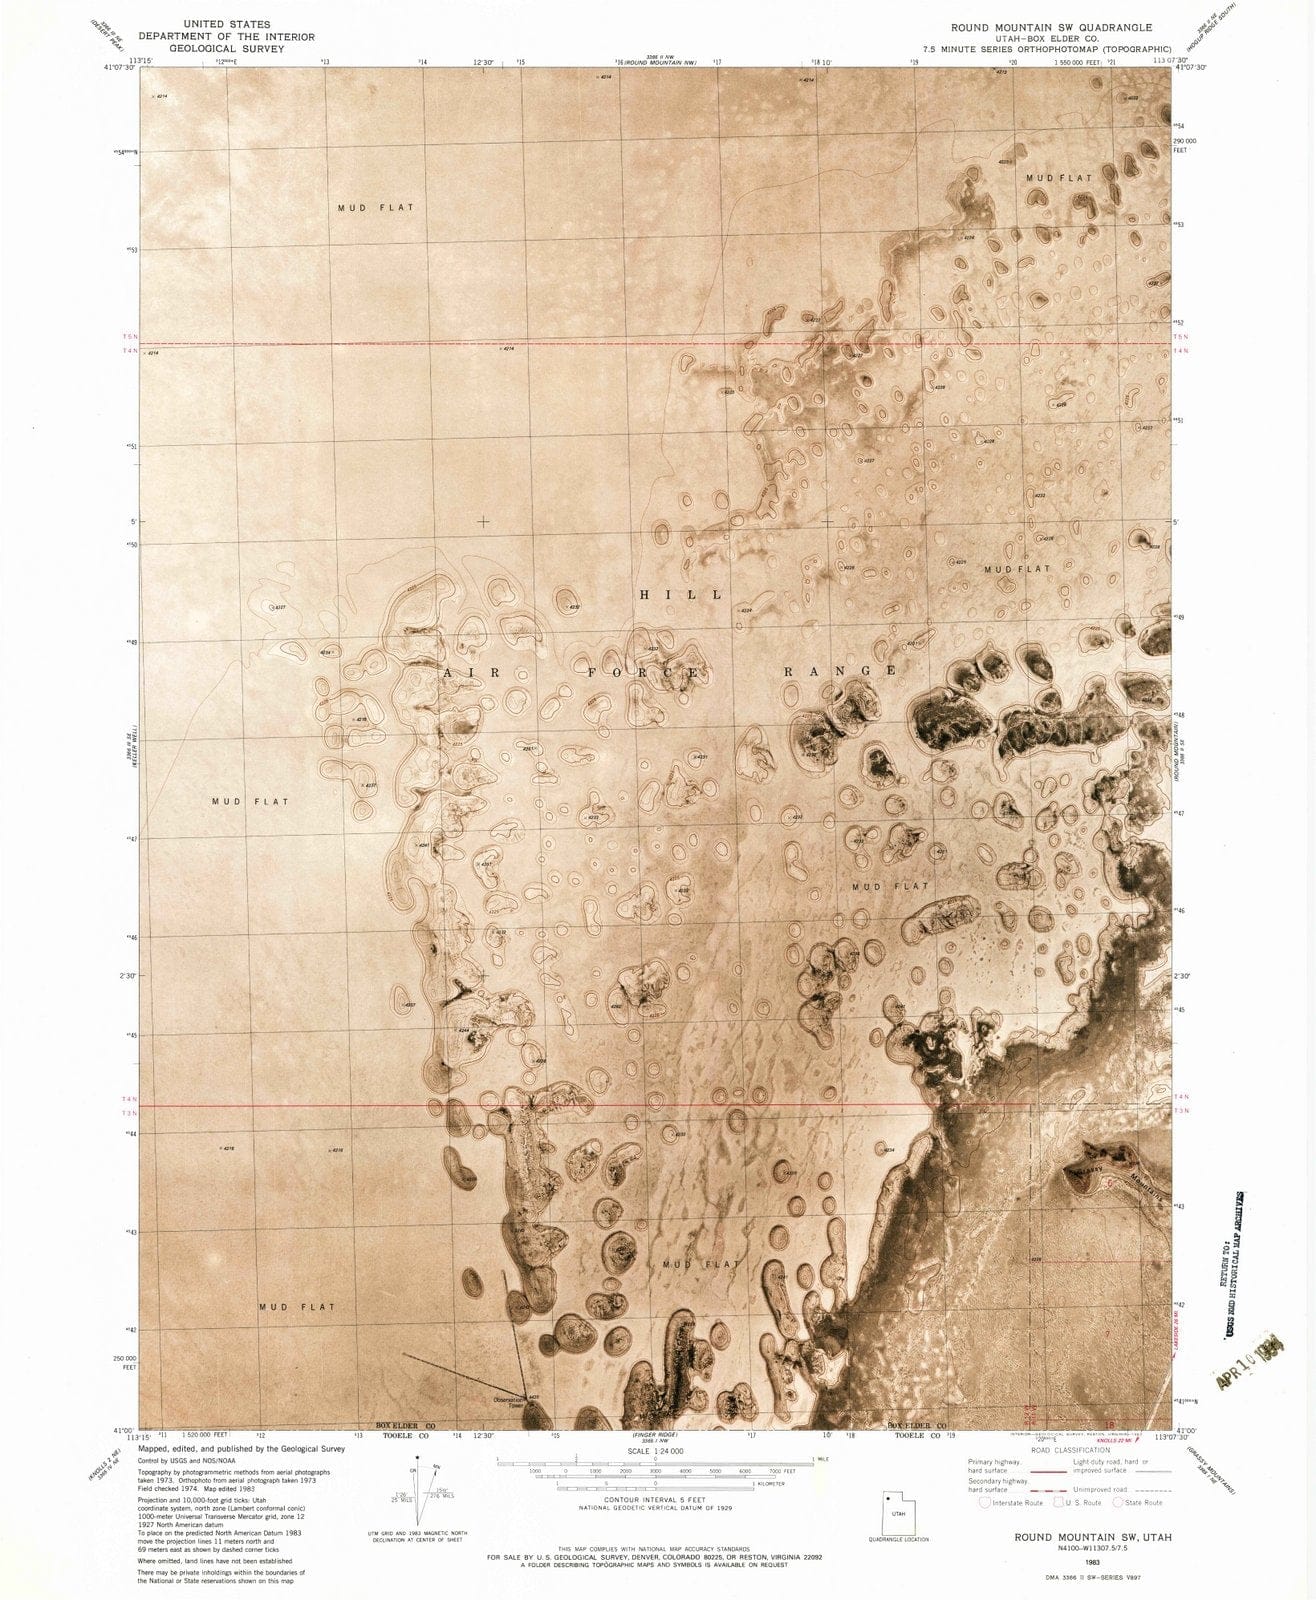 1983 Round Mountain, UT - Utah - USGS Topographic Map v2